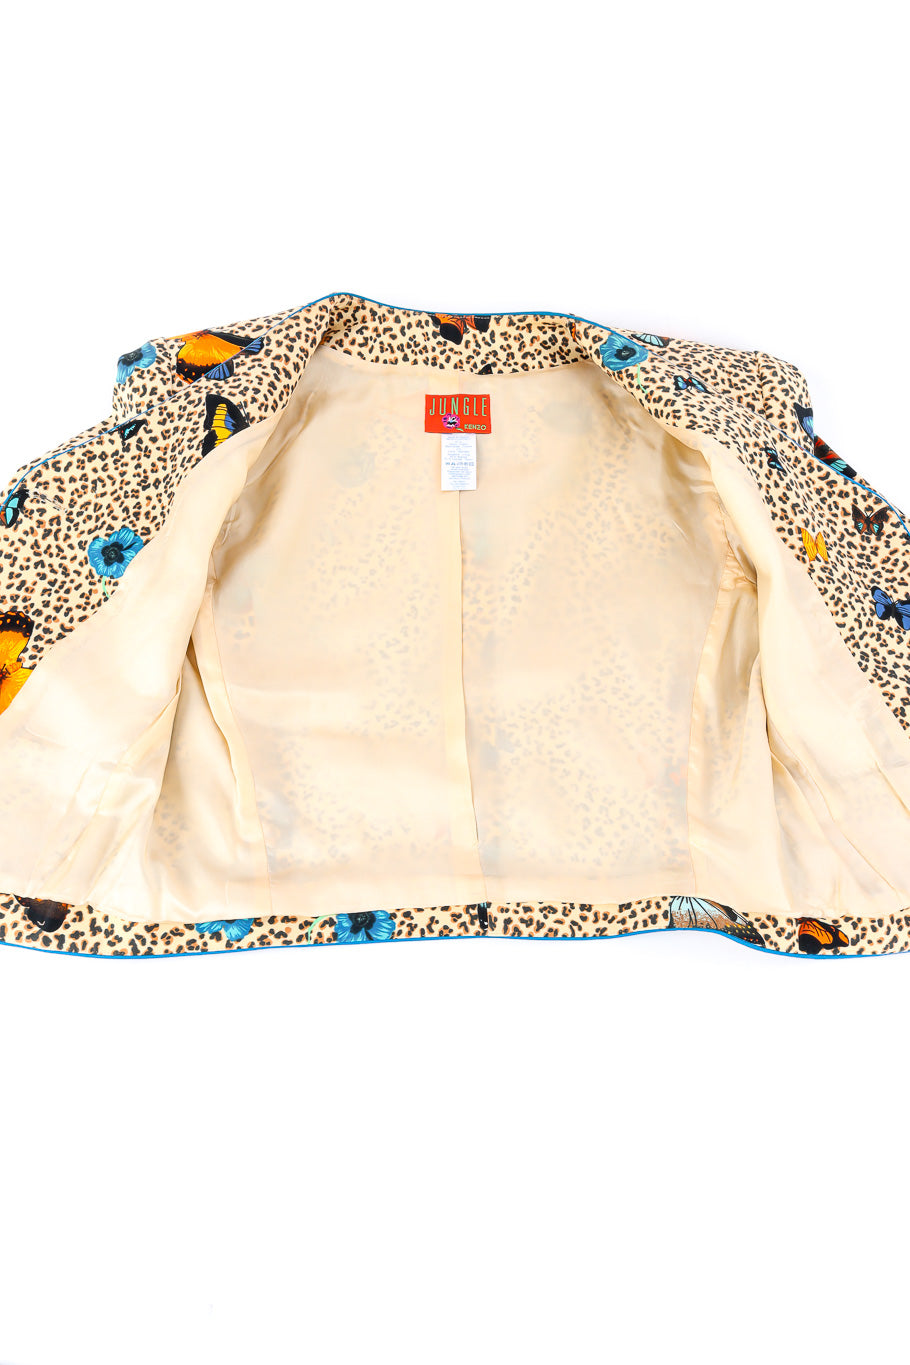 Butterfly jacket and skirt set by Kenzo flat lay jacket open @recessla